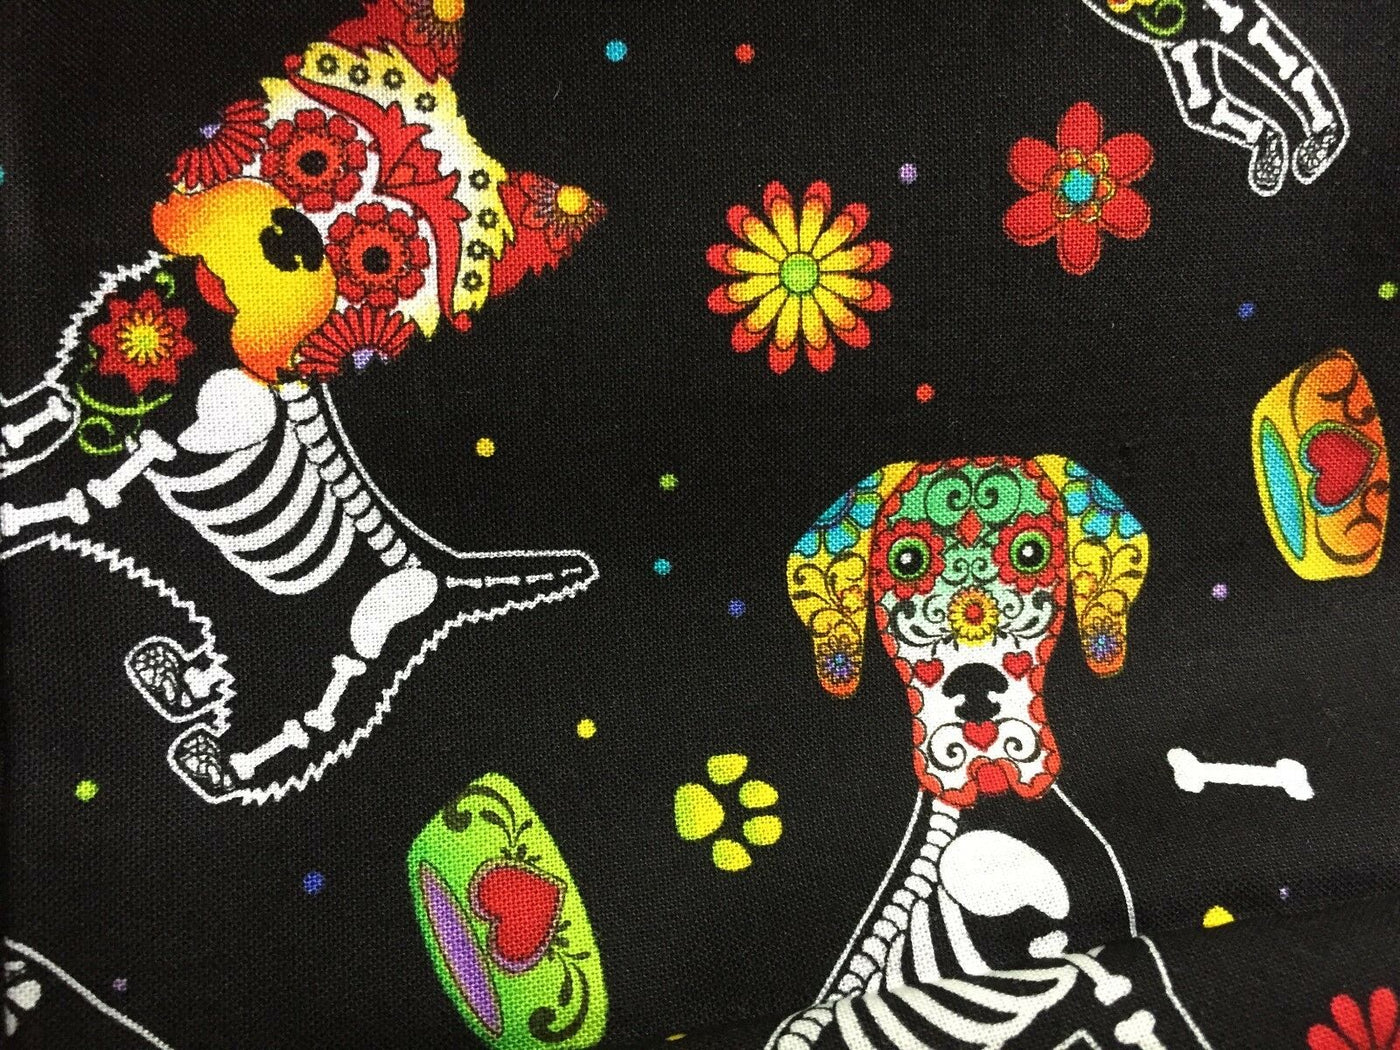 Day of the Dead Dog Muertos skeleton Bandana - Timeless Treasures - 100% Cotton Fabric